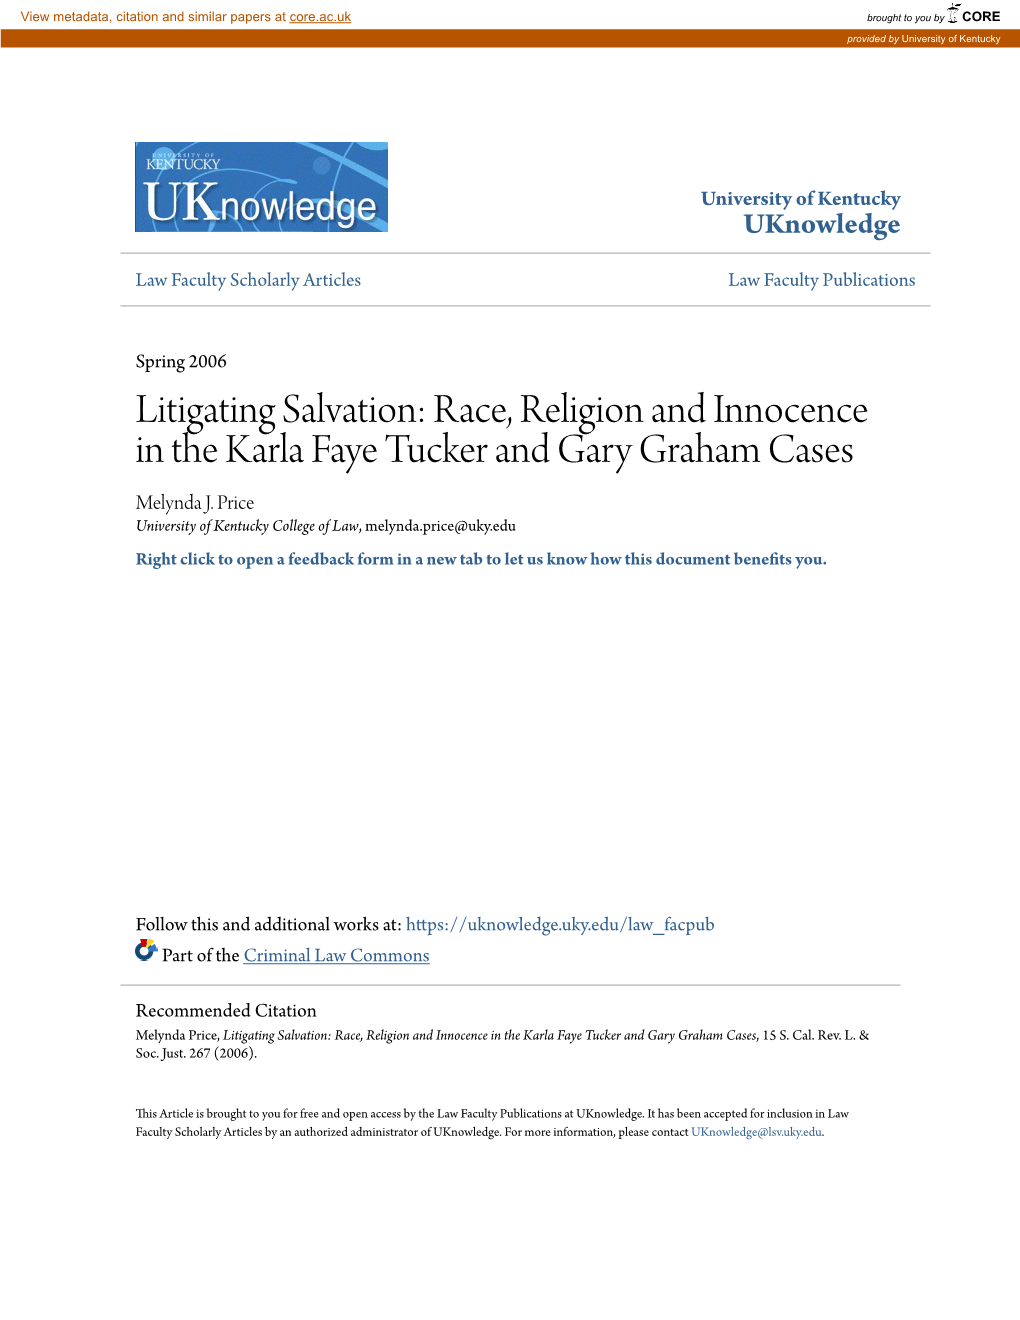 Race, Religion and Innocence in the Karla Faye Tucker and Gary Graham Cases Melynda J